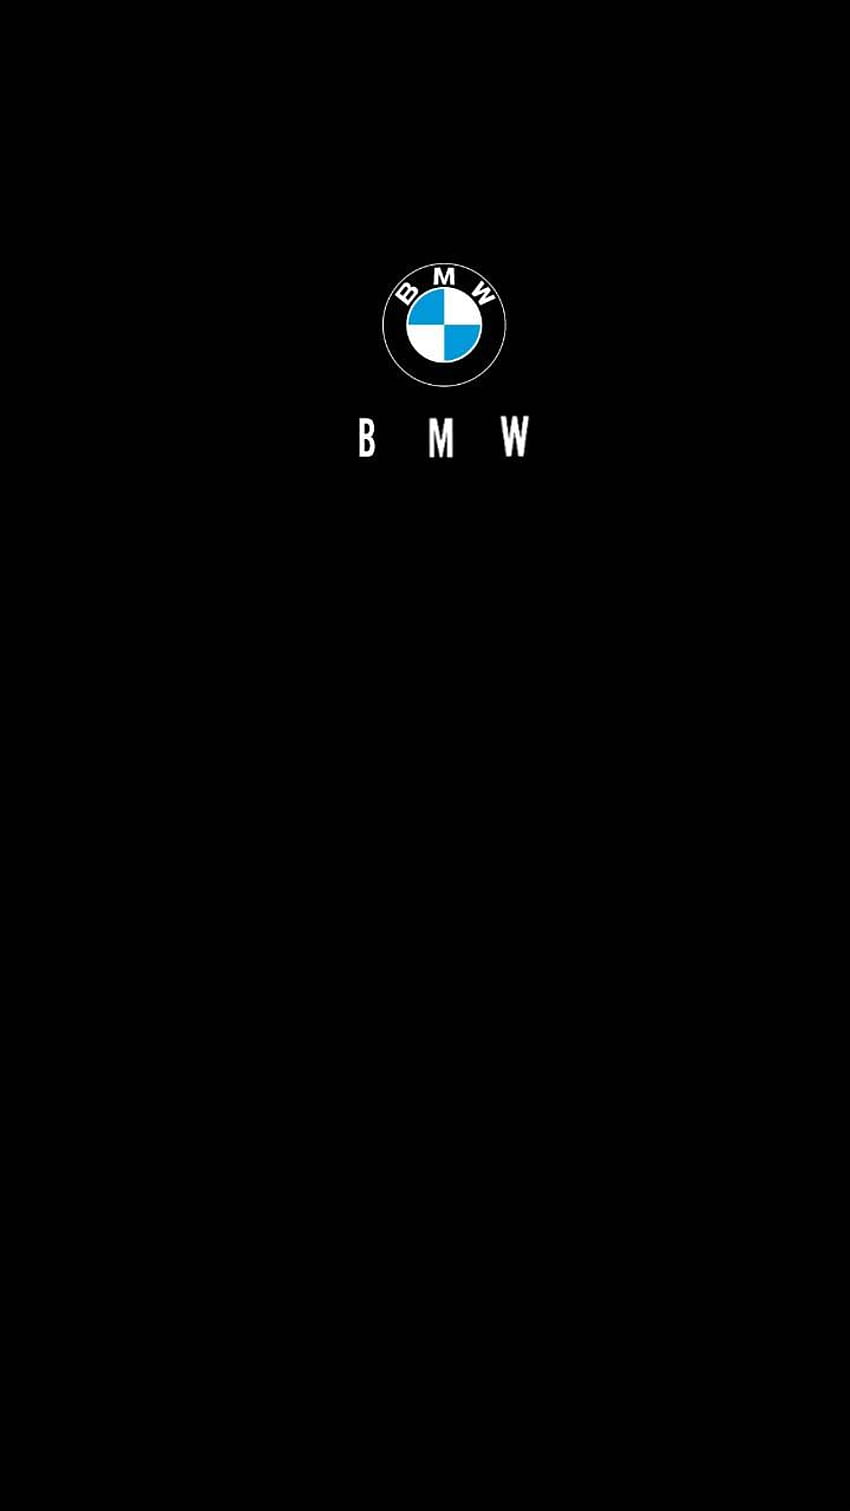 BMW Logo Wallpaper  Find best latest BMW Logo Wallpaper in HD for your PC  desktop background  mobile phones  Brands and Logos  Pinterest  Bmw  logo 